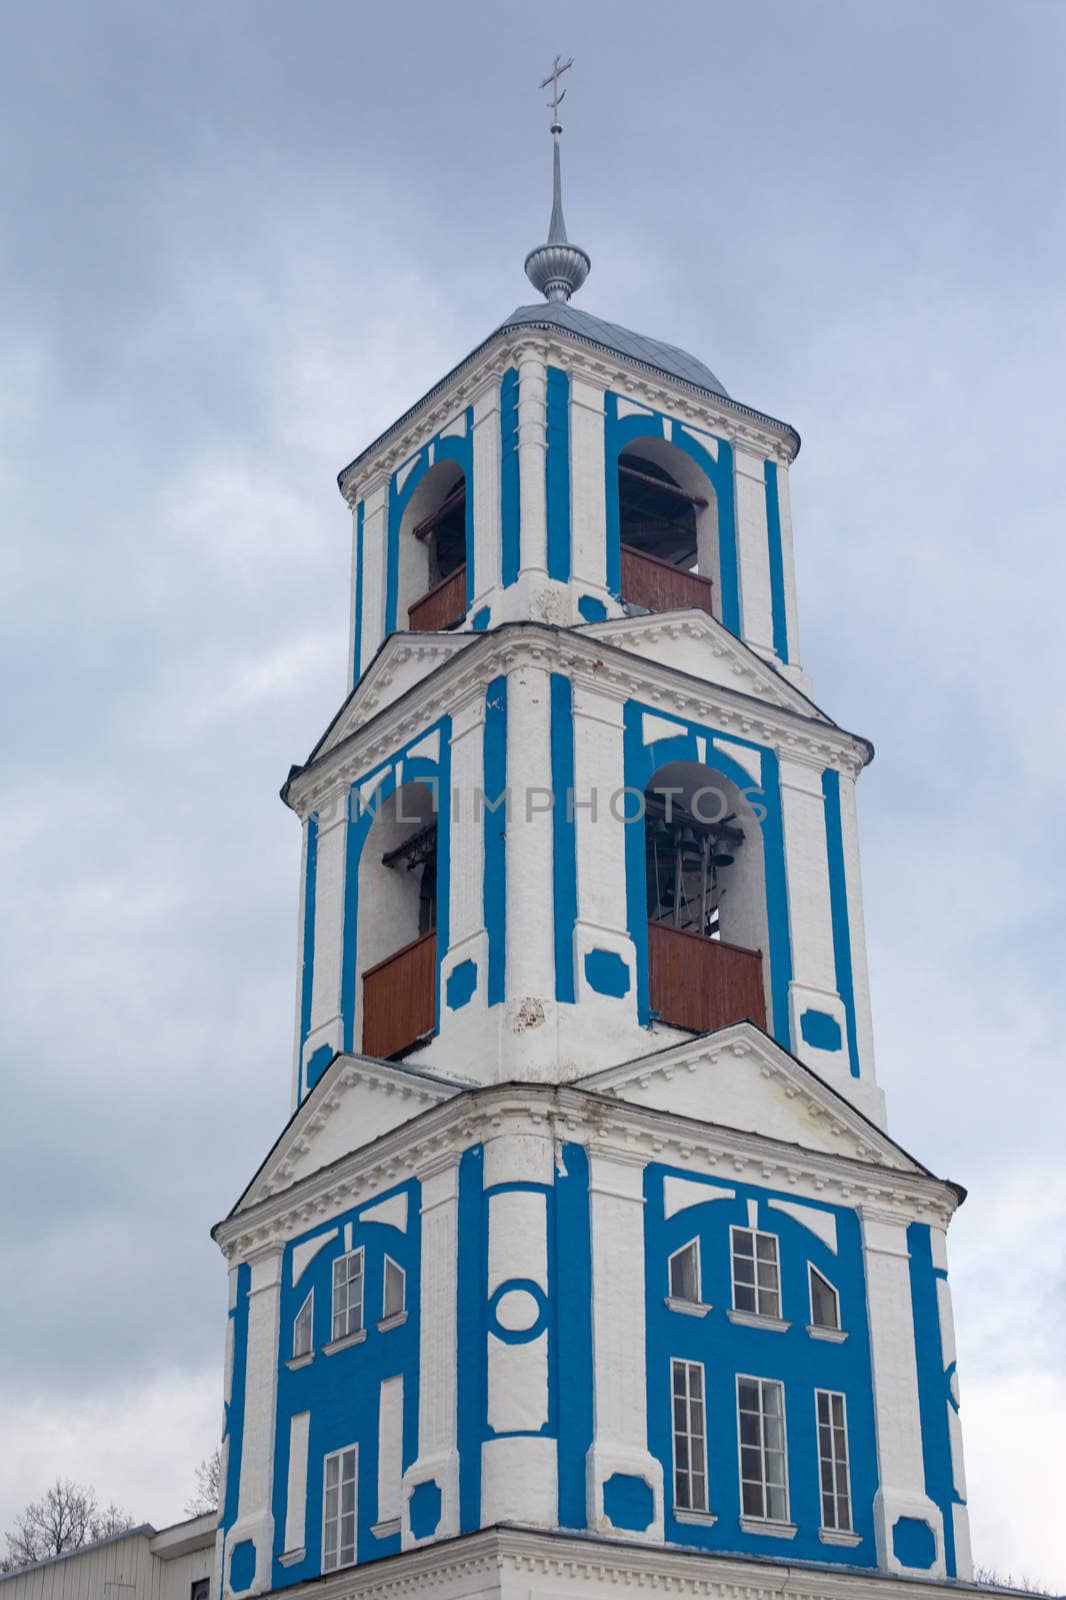 Blue bell tower by foaloce